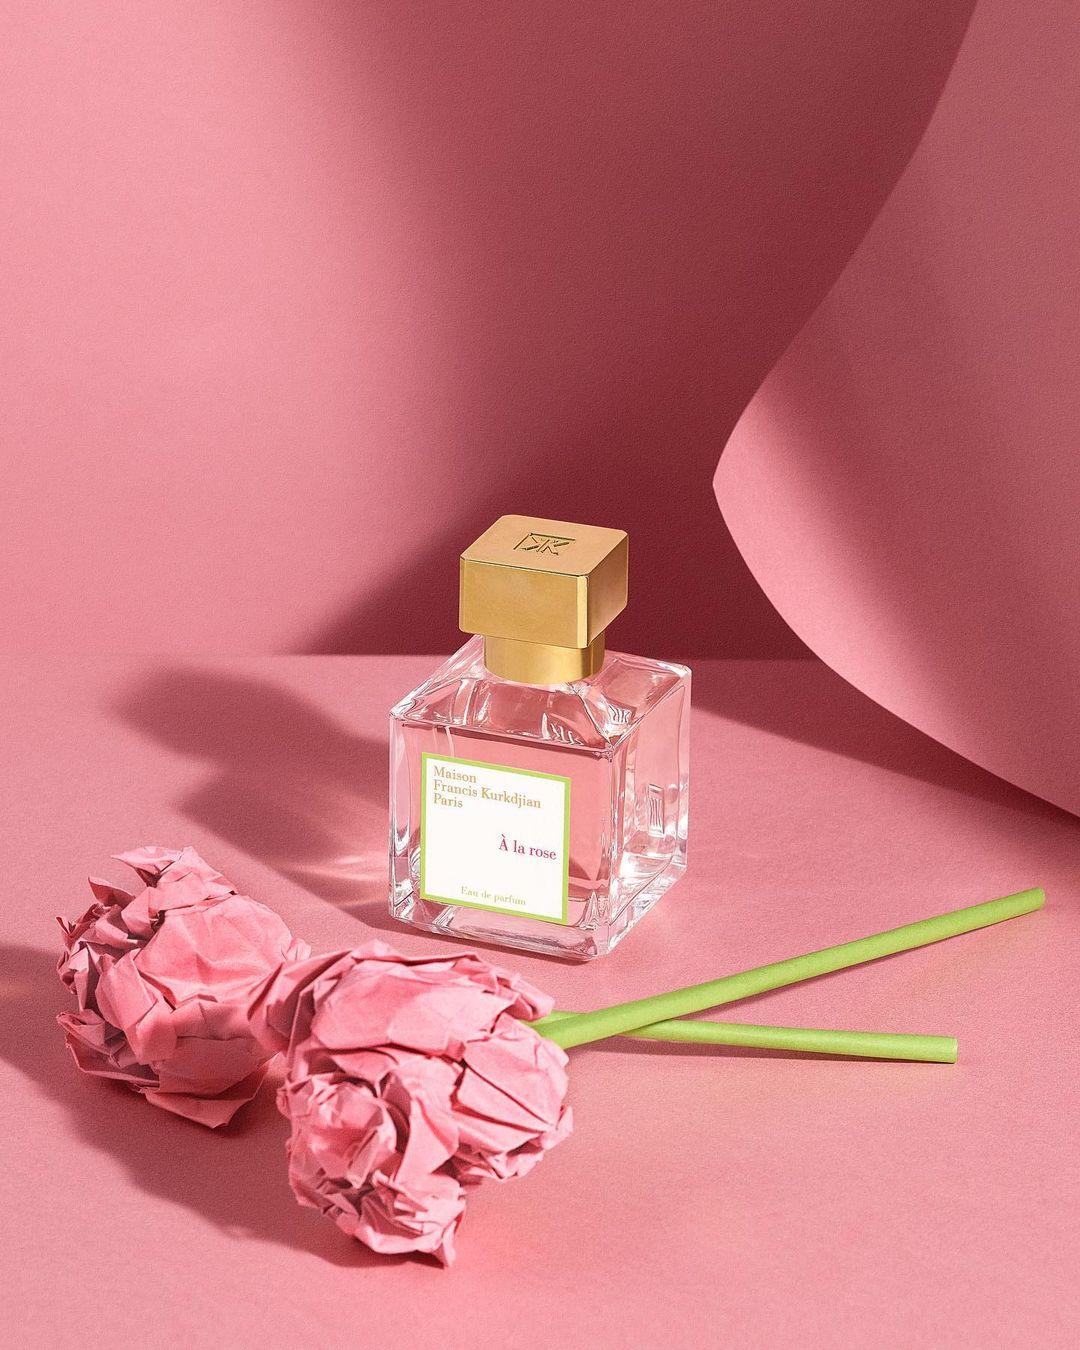 A la rose - eau de parfum by Maison Francis Kurkdjian • Perfume